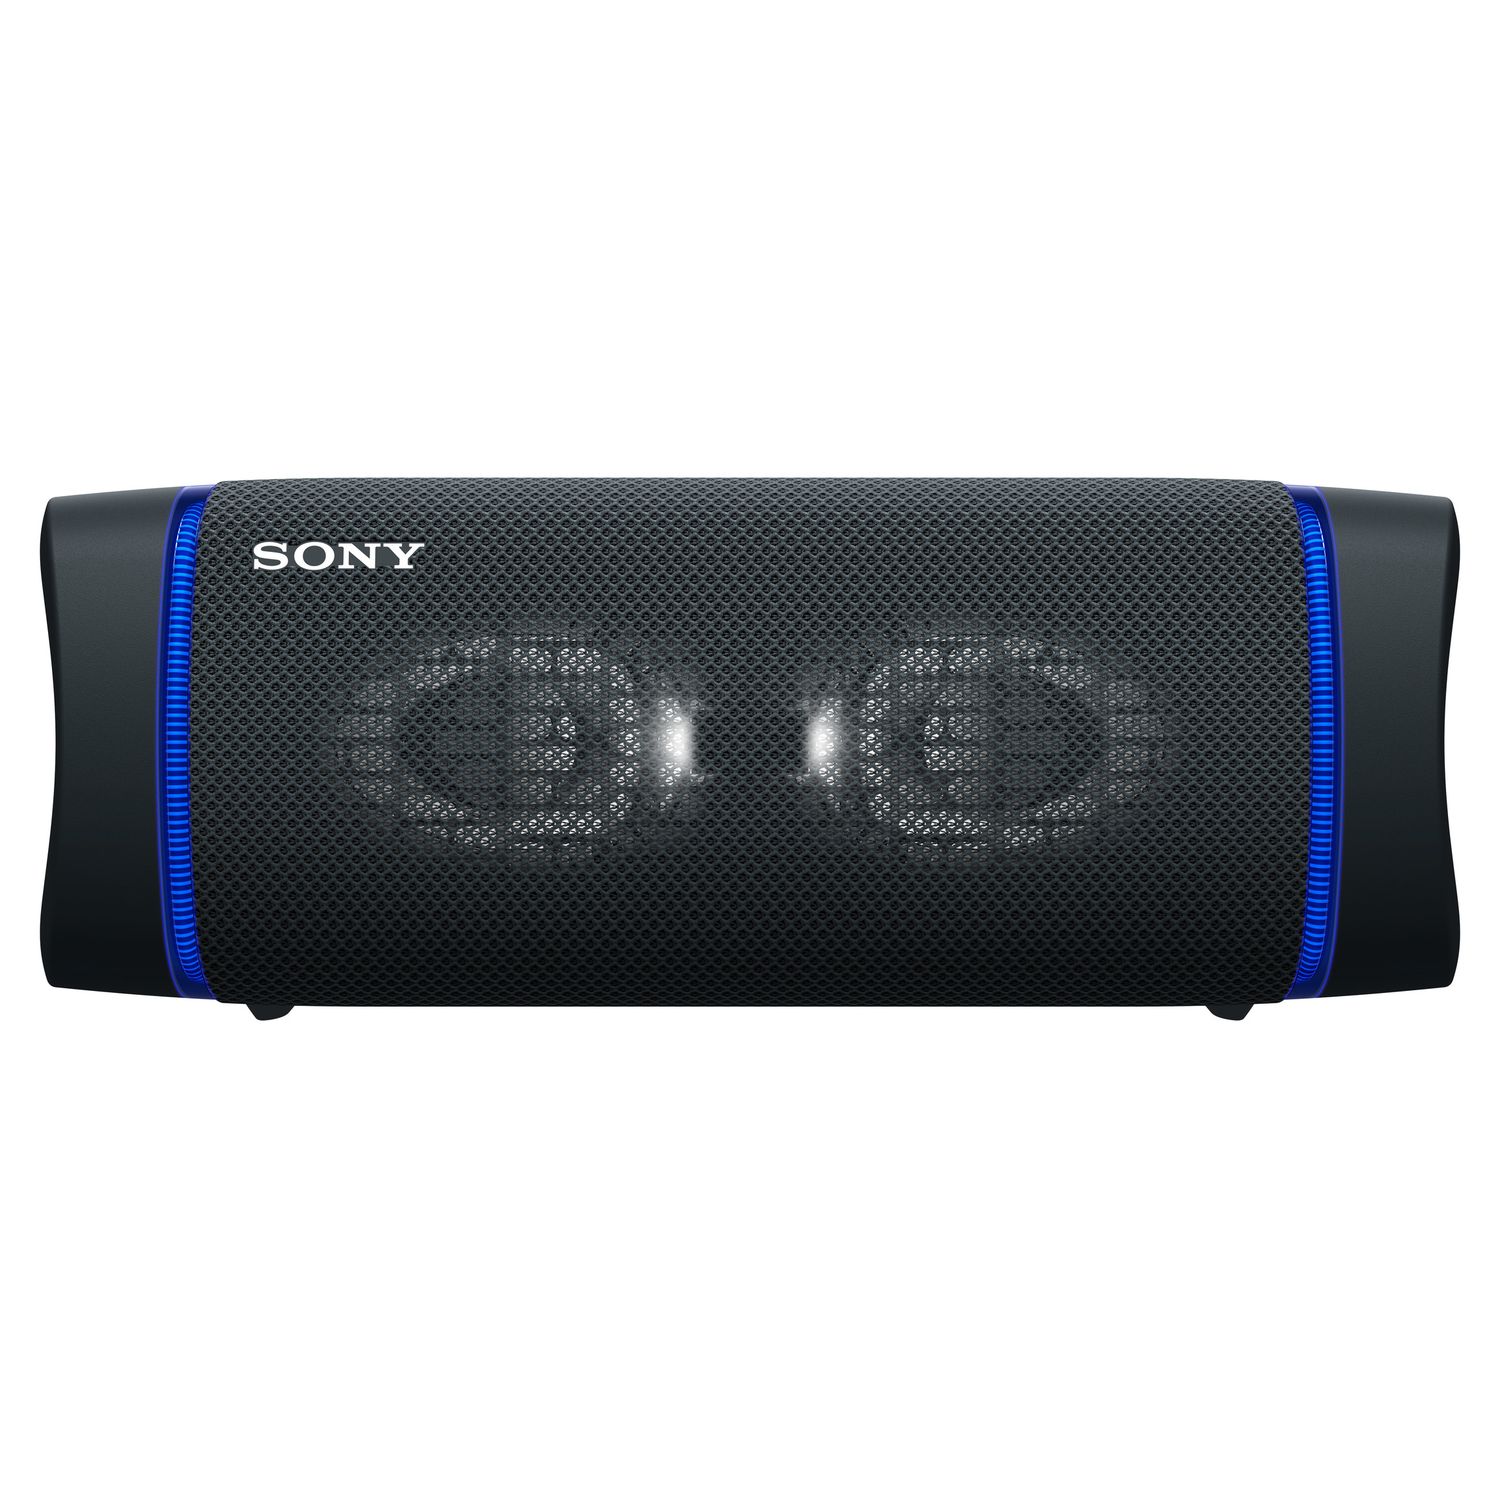 SONY Enceinte portable Bluetooth - Noir - SRS-XB33 pas cher